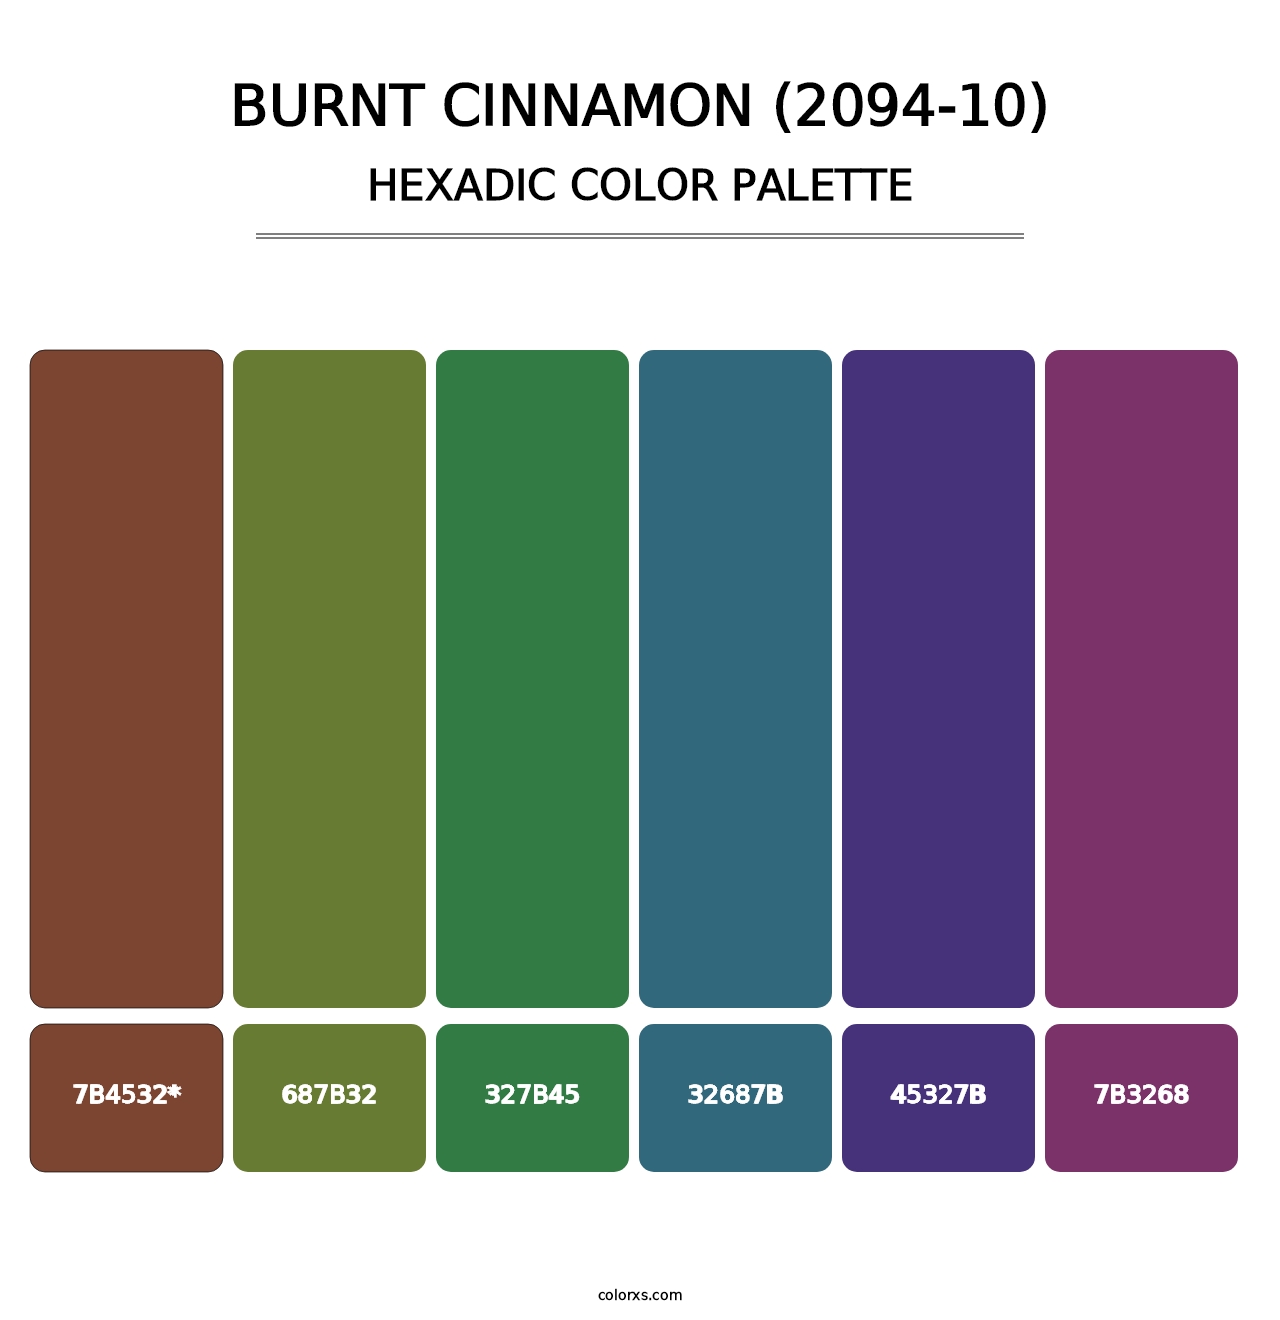 Burnt Cinnamon (2094-10) - Hexadic Color Palette